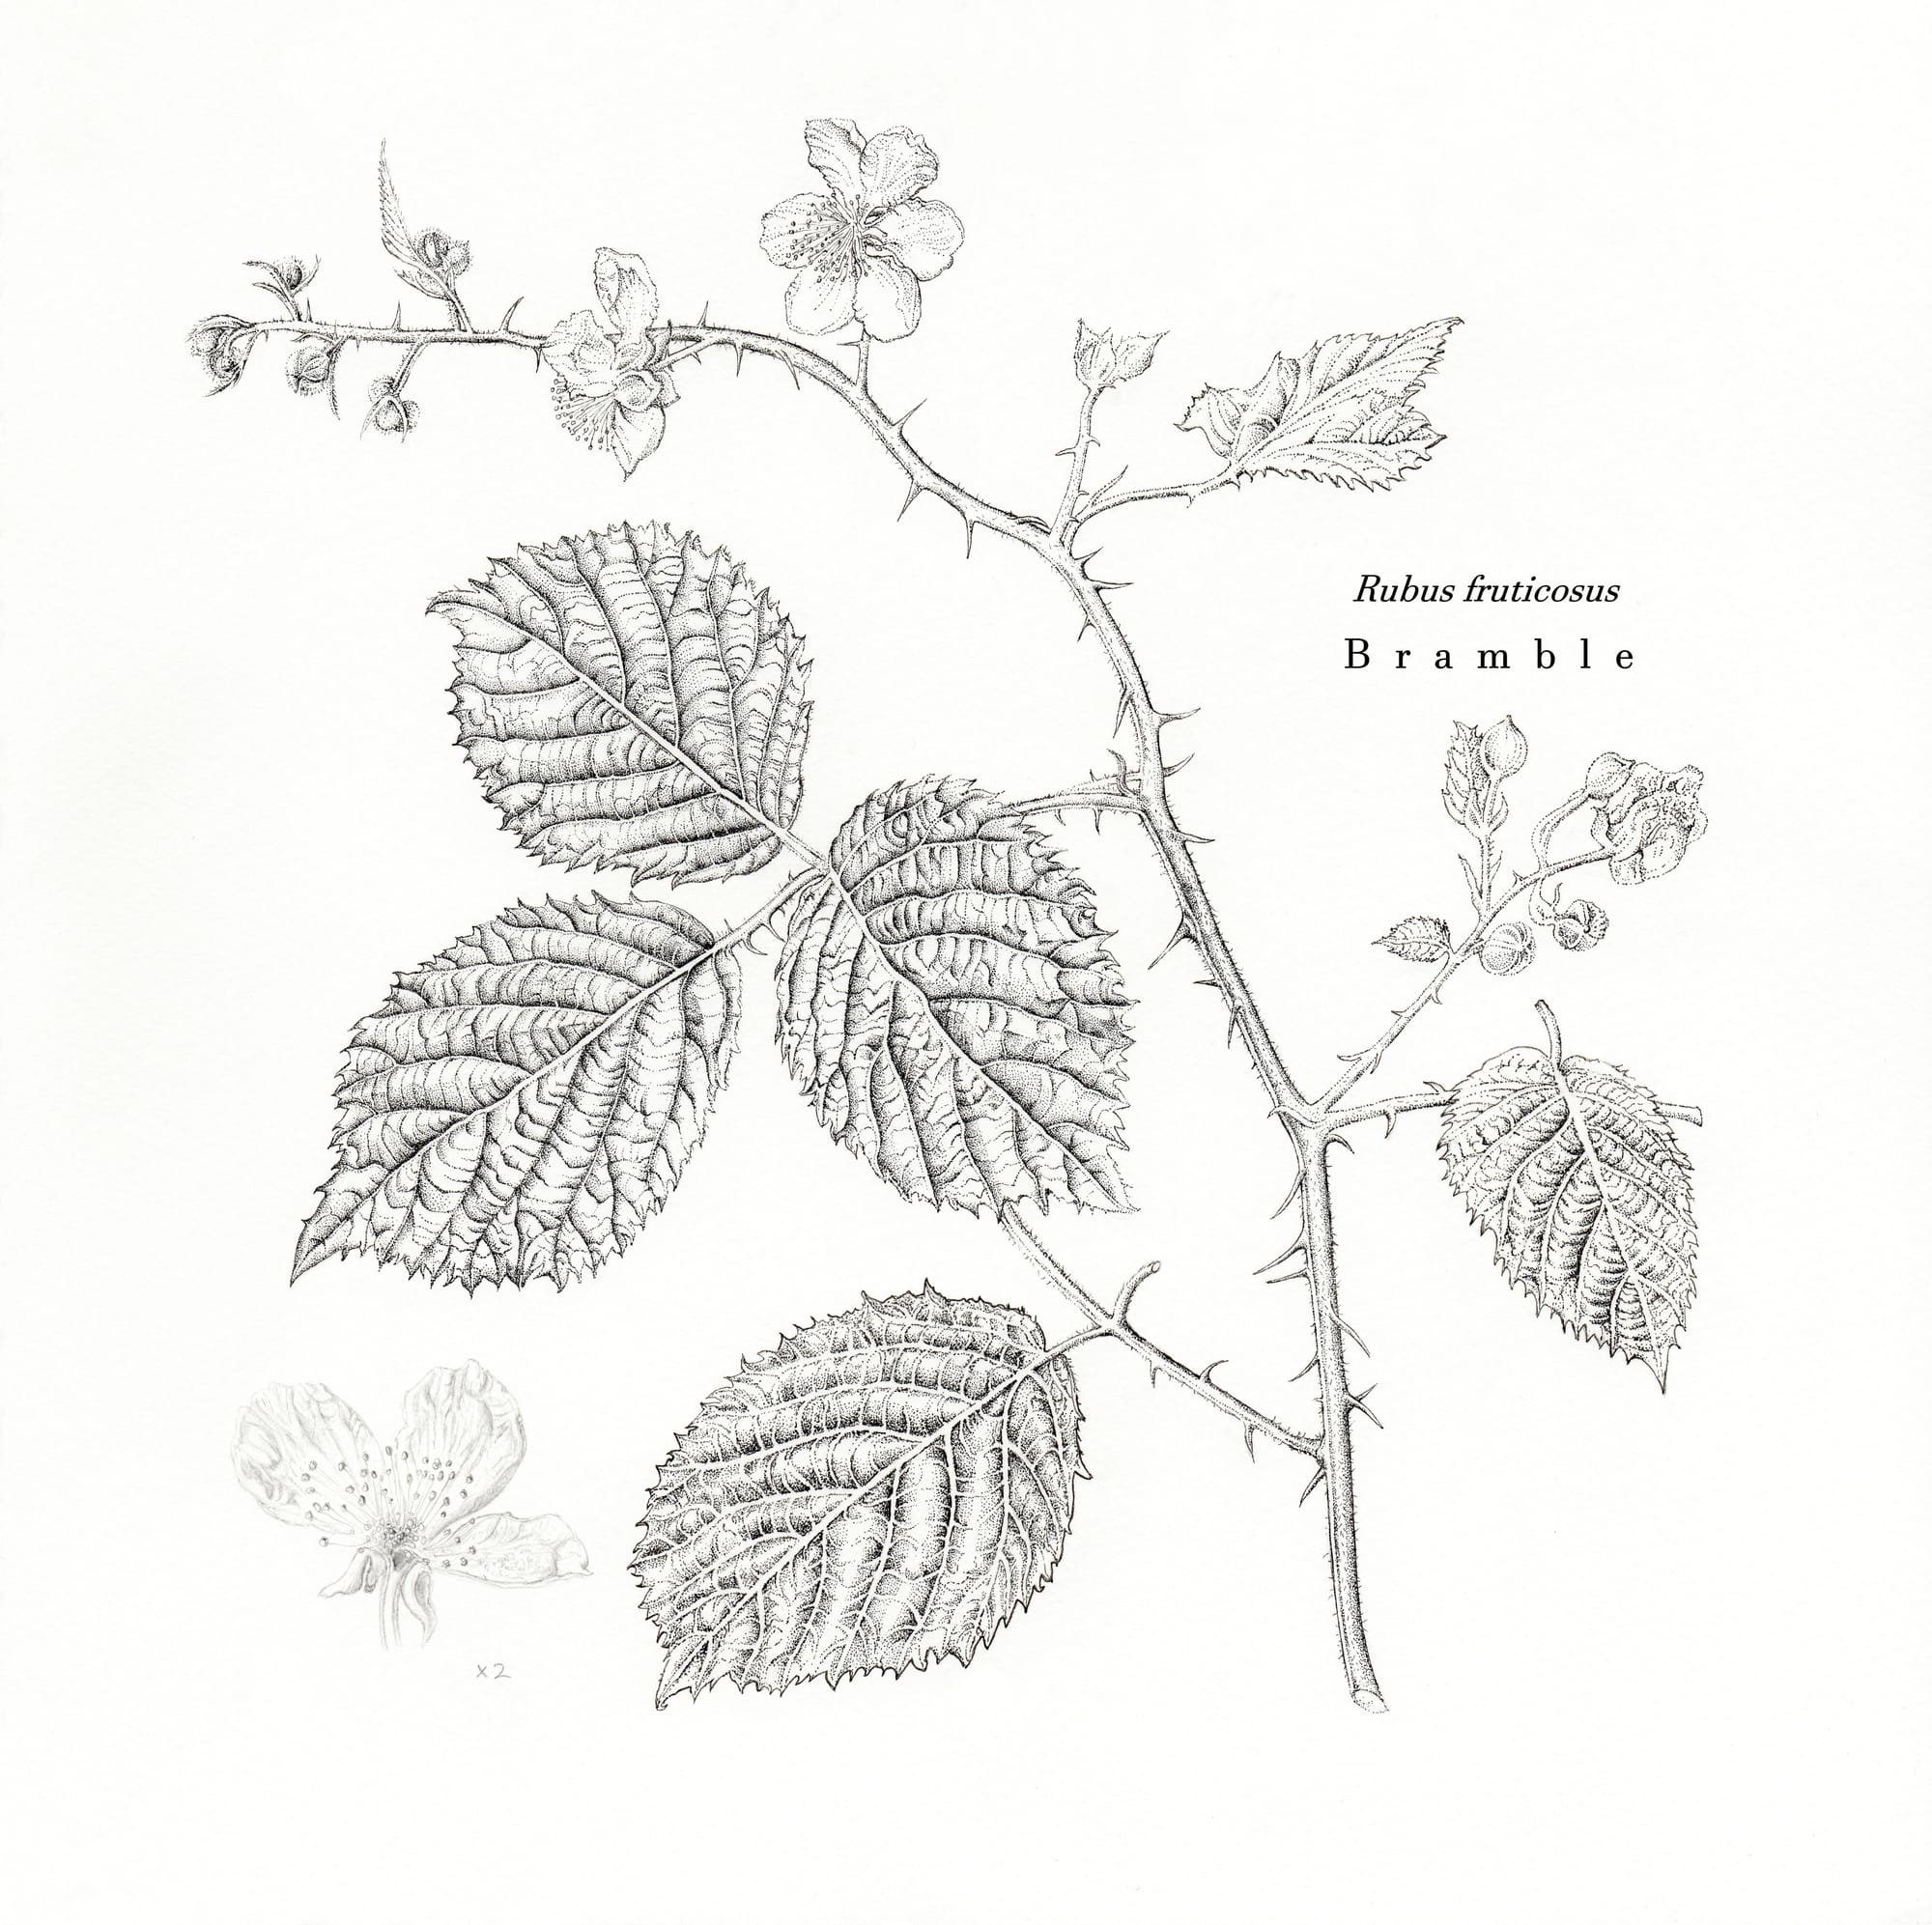 Bramble 'Rubus fruticosus'